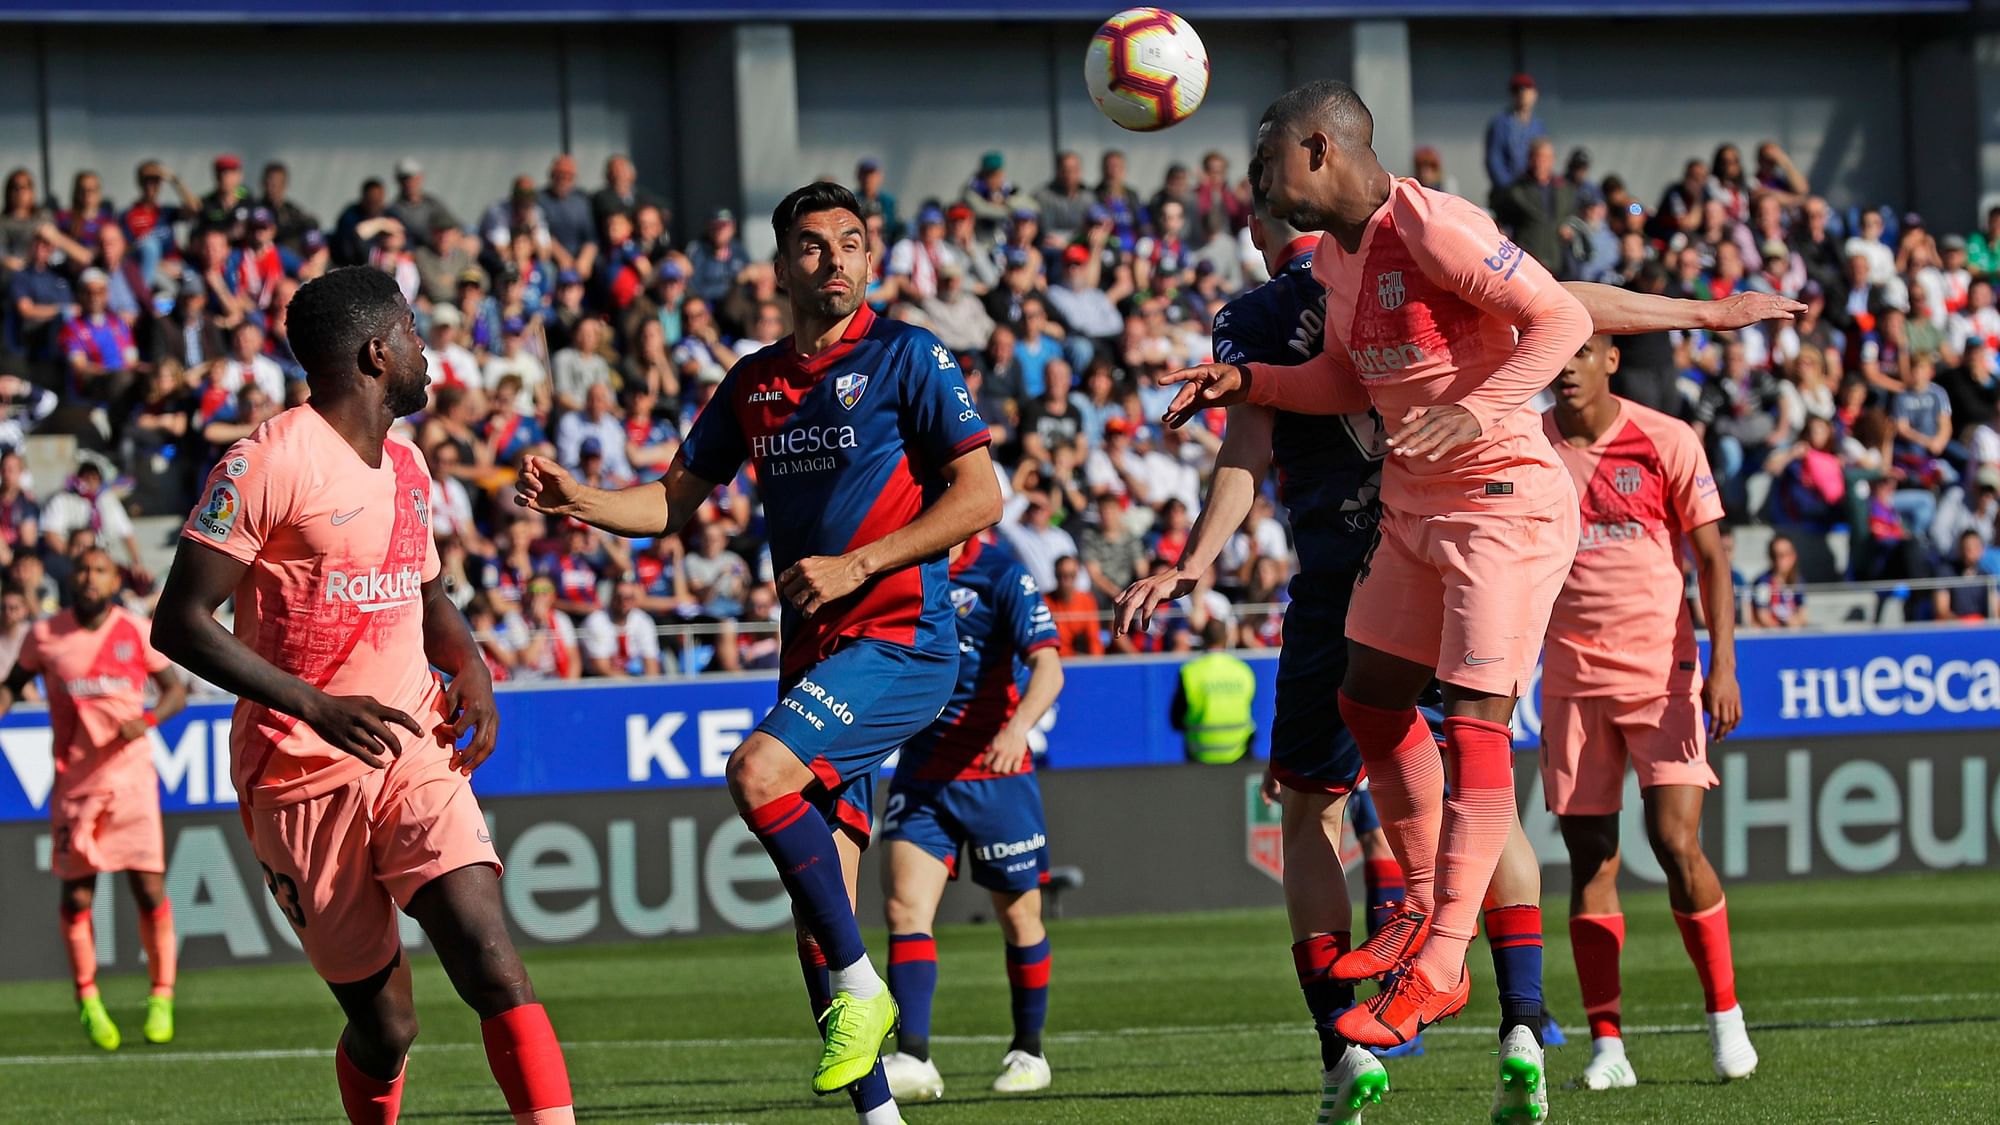 Barcelona’s Malcom Oliveira, right, heads the ball during the Spanish La Liga football match between Huesca and Barcelona at the Alcoraz stadium in Huesca.